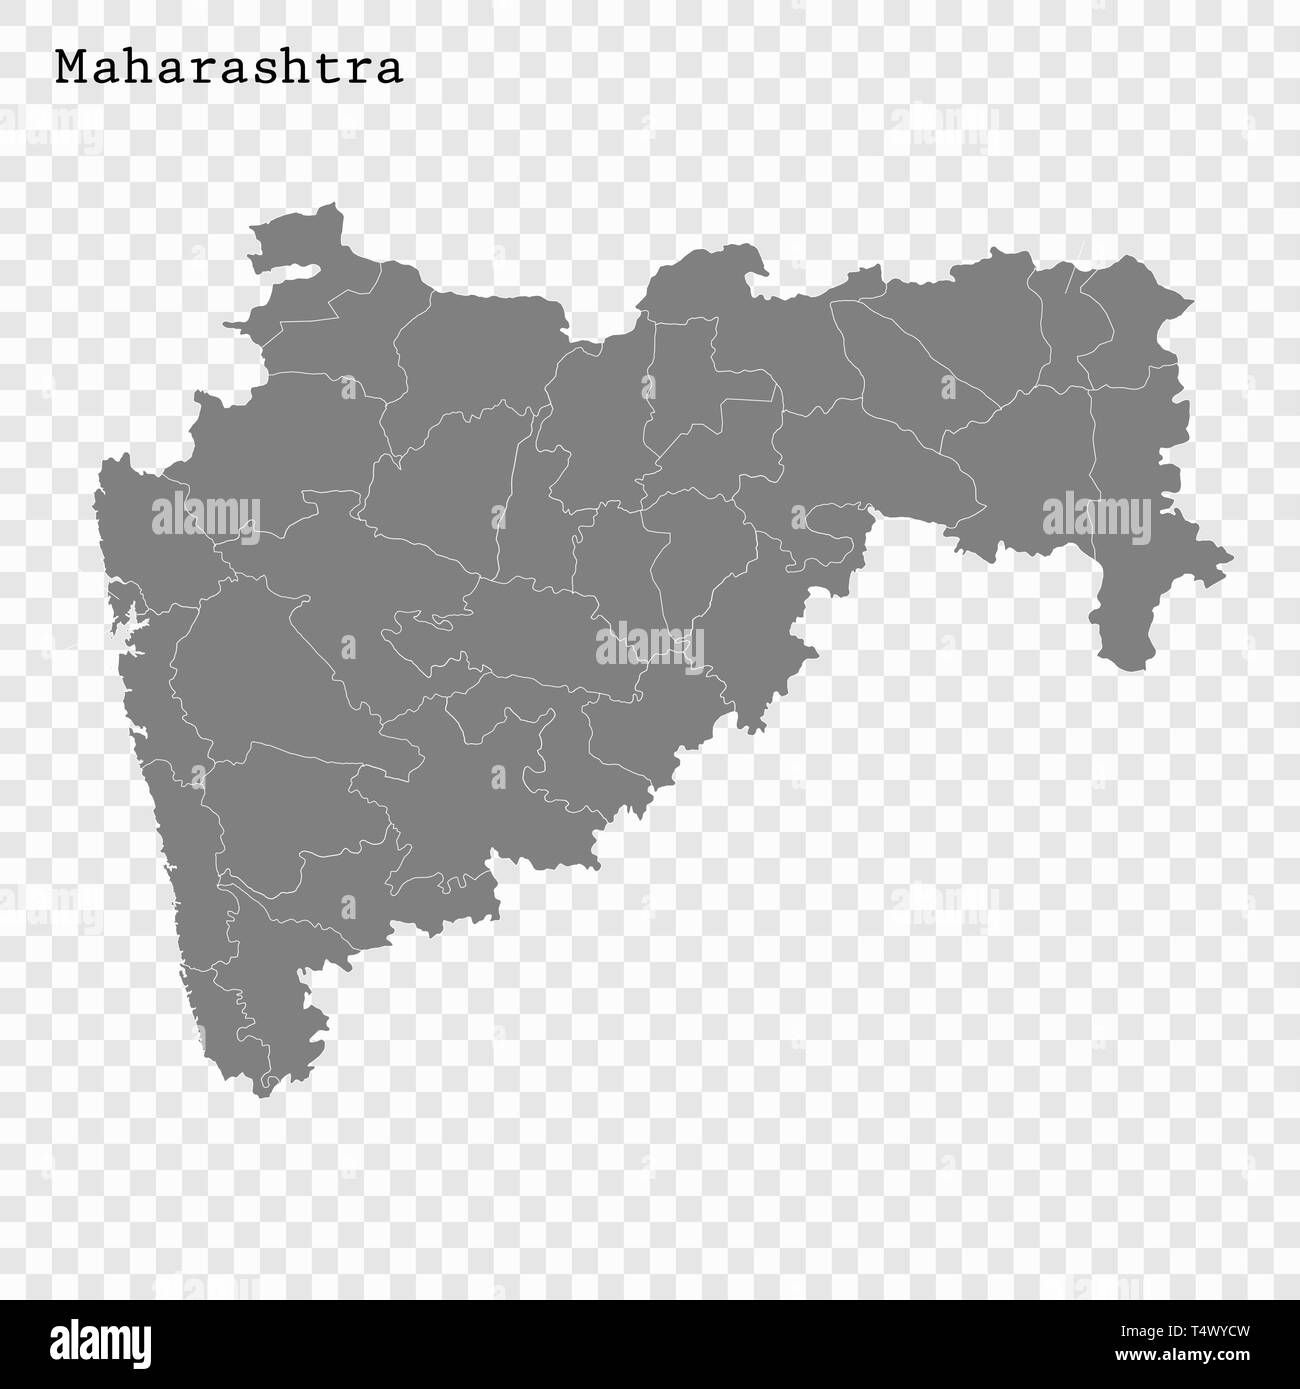 Maharashtra map Royalty Free Vector Image - VectorStock